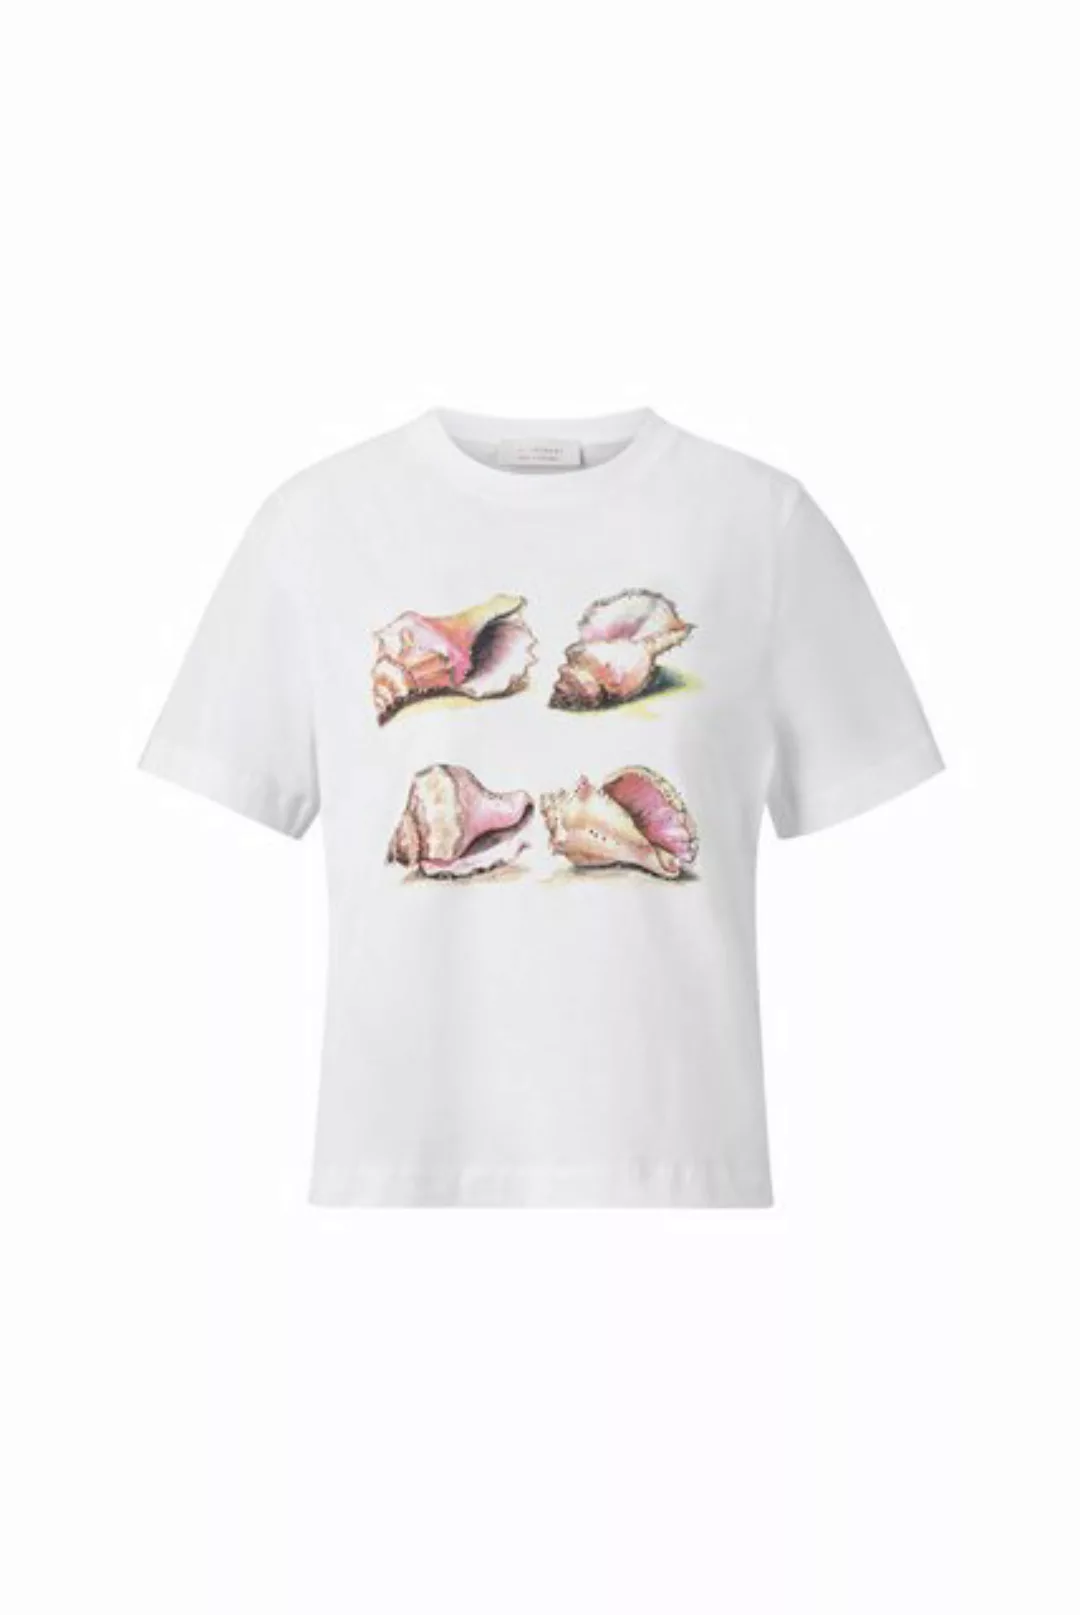 Rich & Royal T-Shirt elegant fit T-Shirt seashell print organic günstig online kaufen